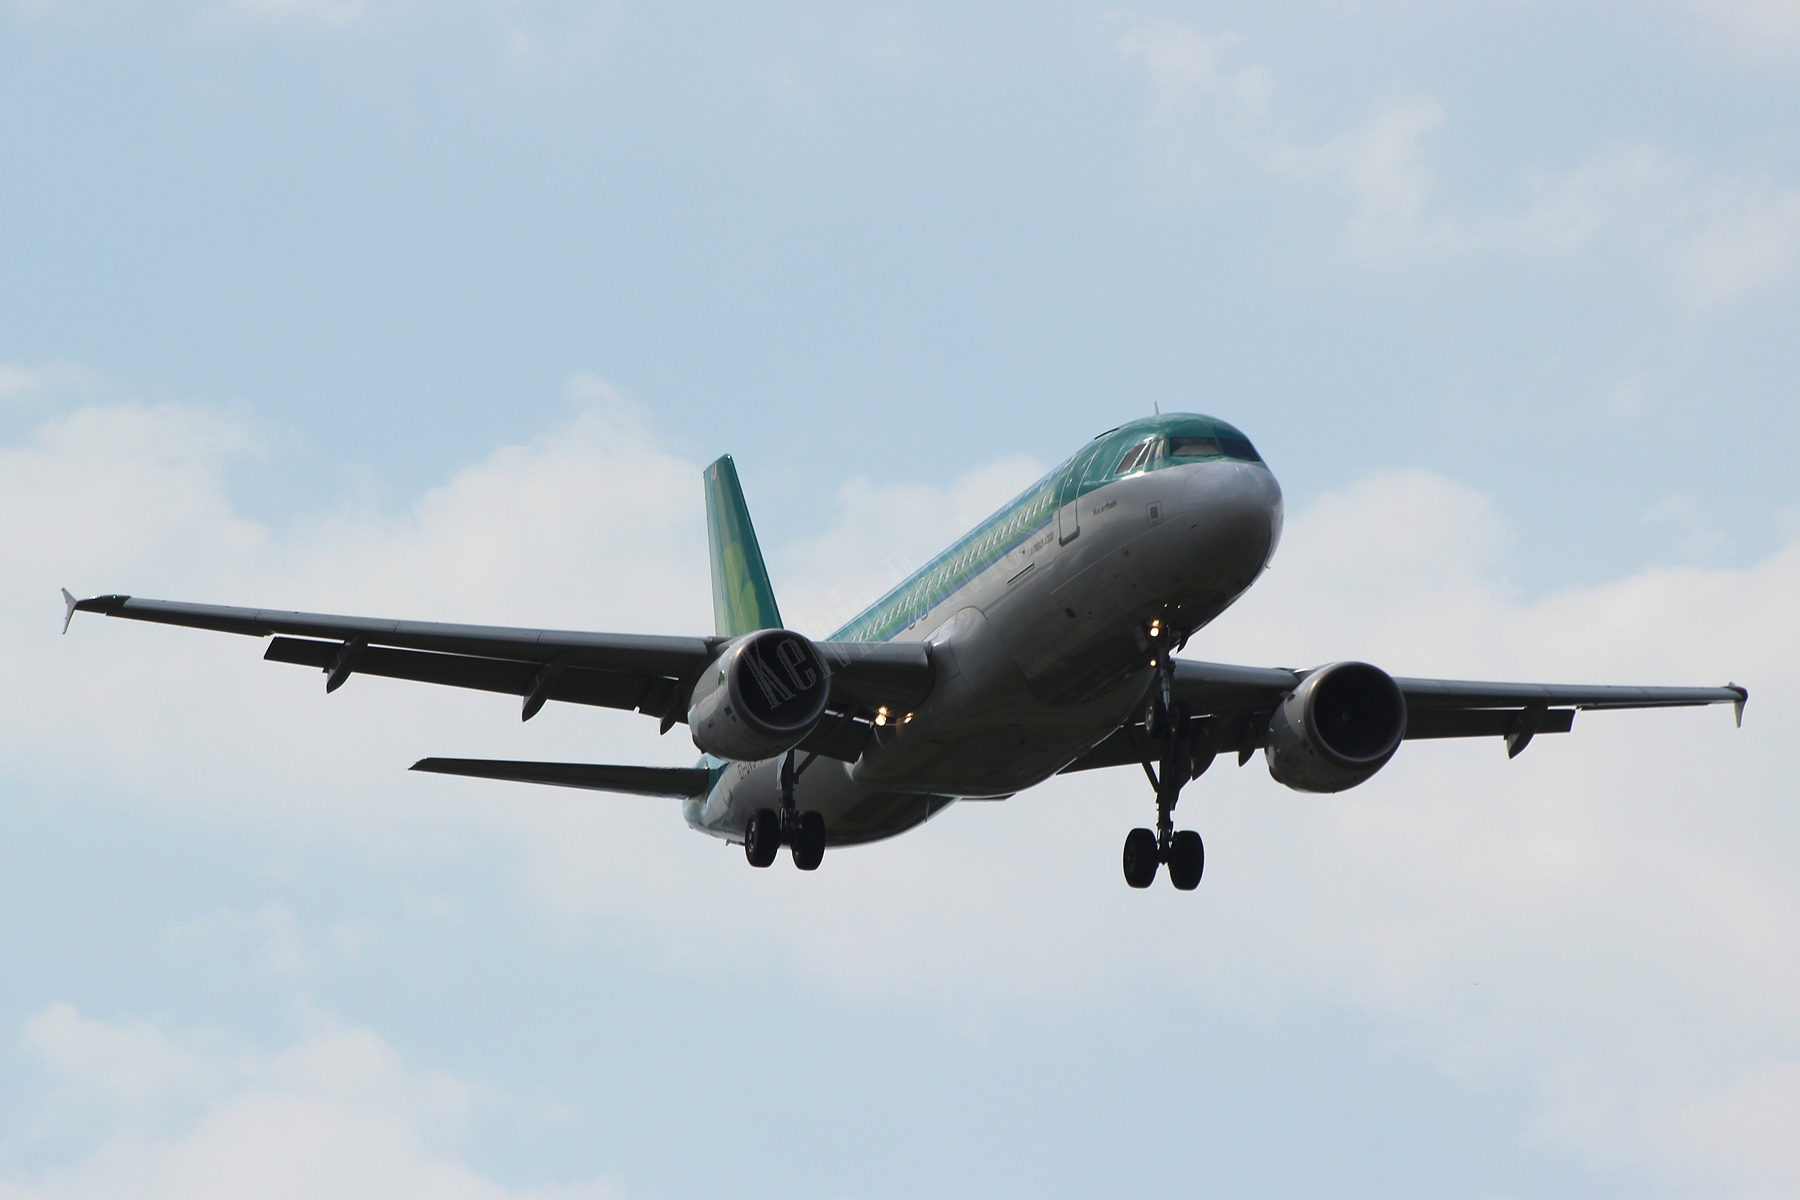 Aer Lingus A320 EI-DVJ